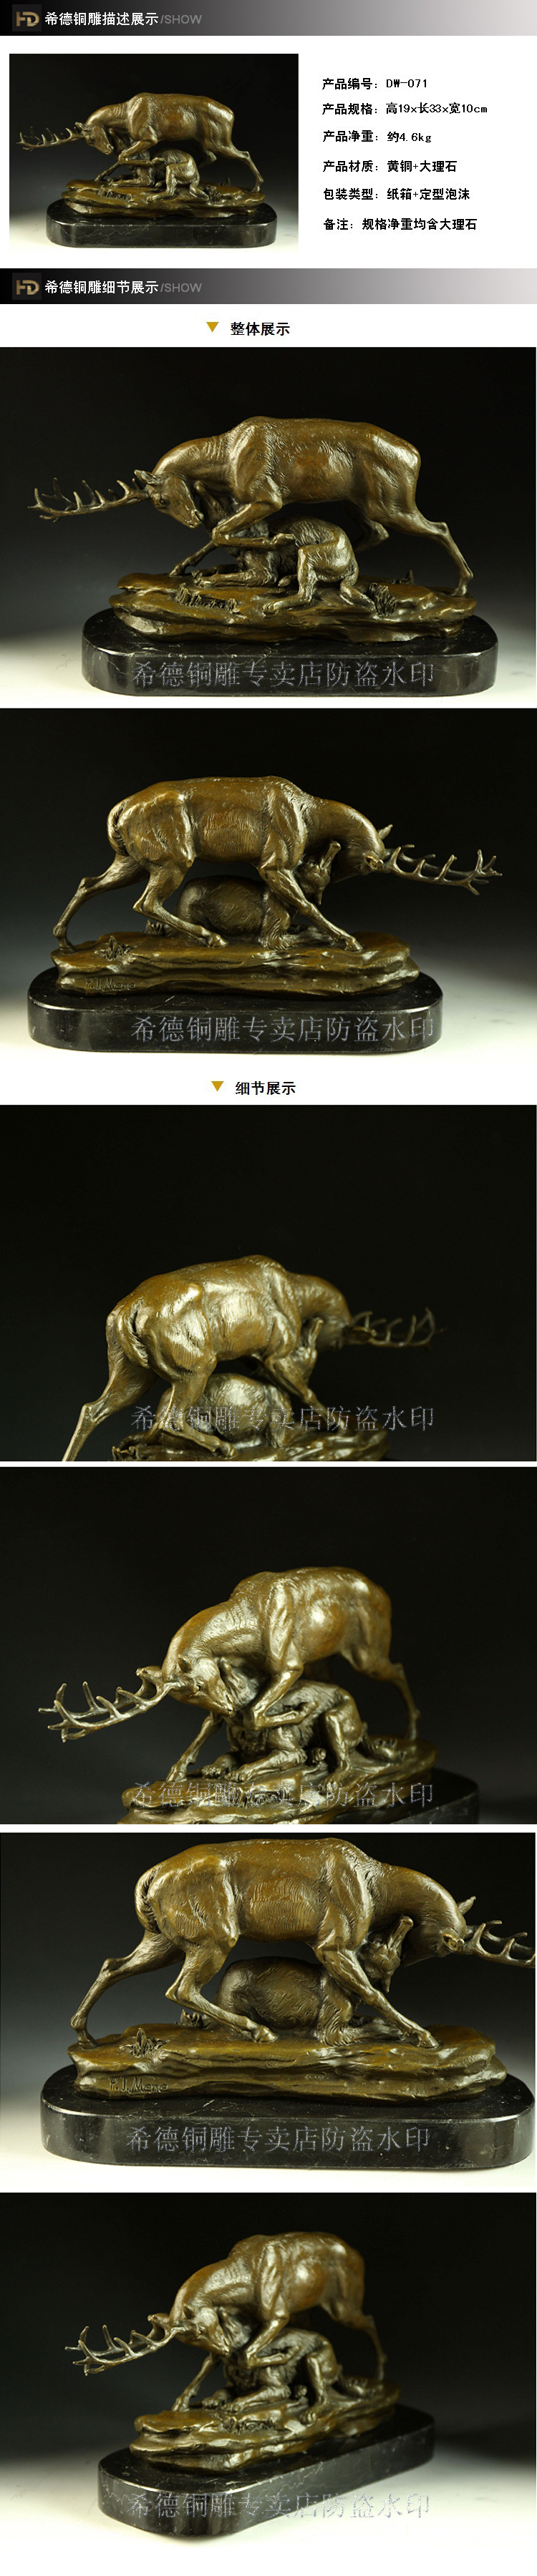 Copper sculpture bronze sculpture, animal sculpture crafts mother and son dw-071